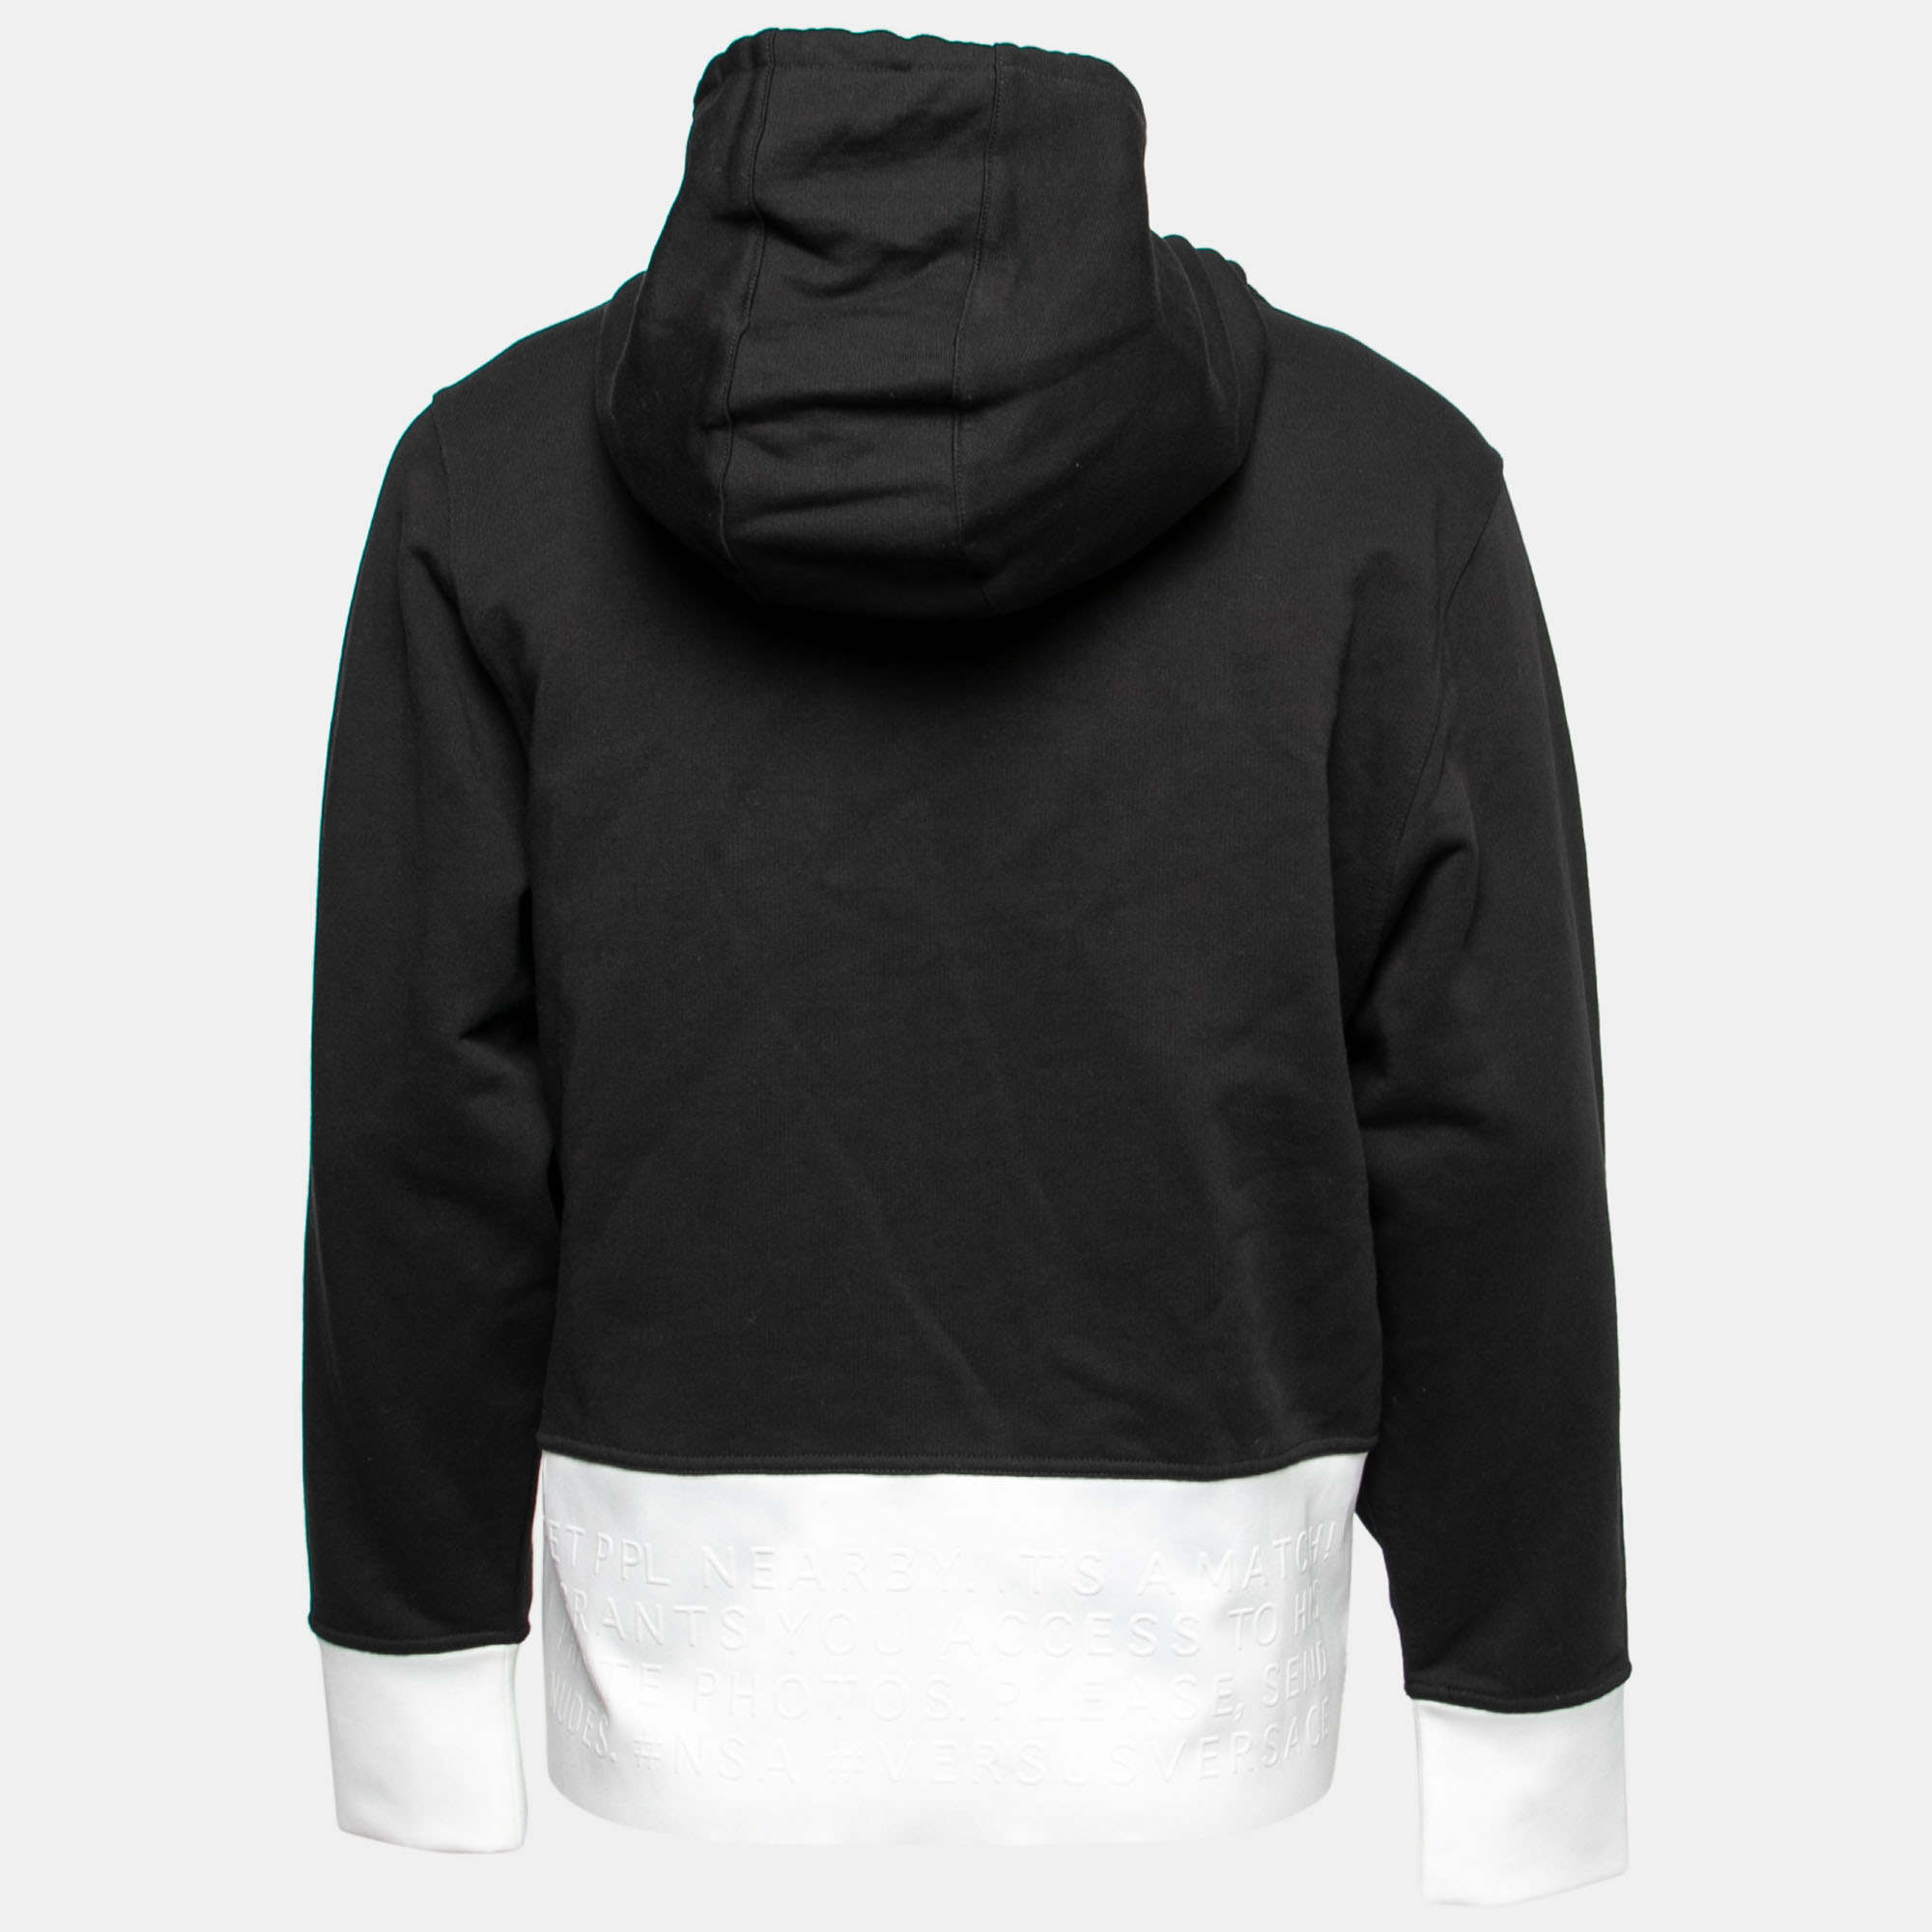 

Versus Versace Black Cotton Embossed Insert Hooded Sweatshirt